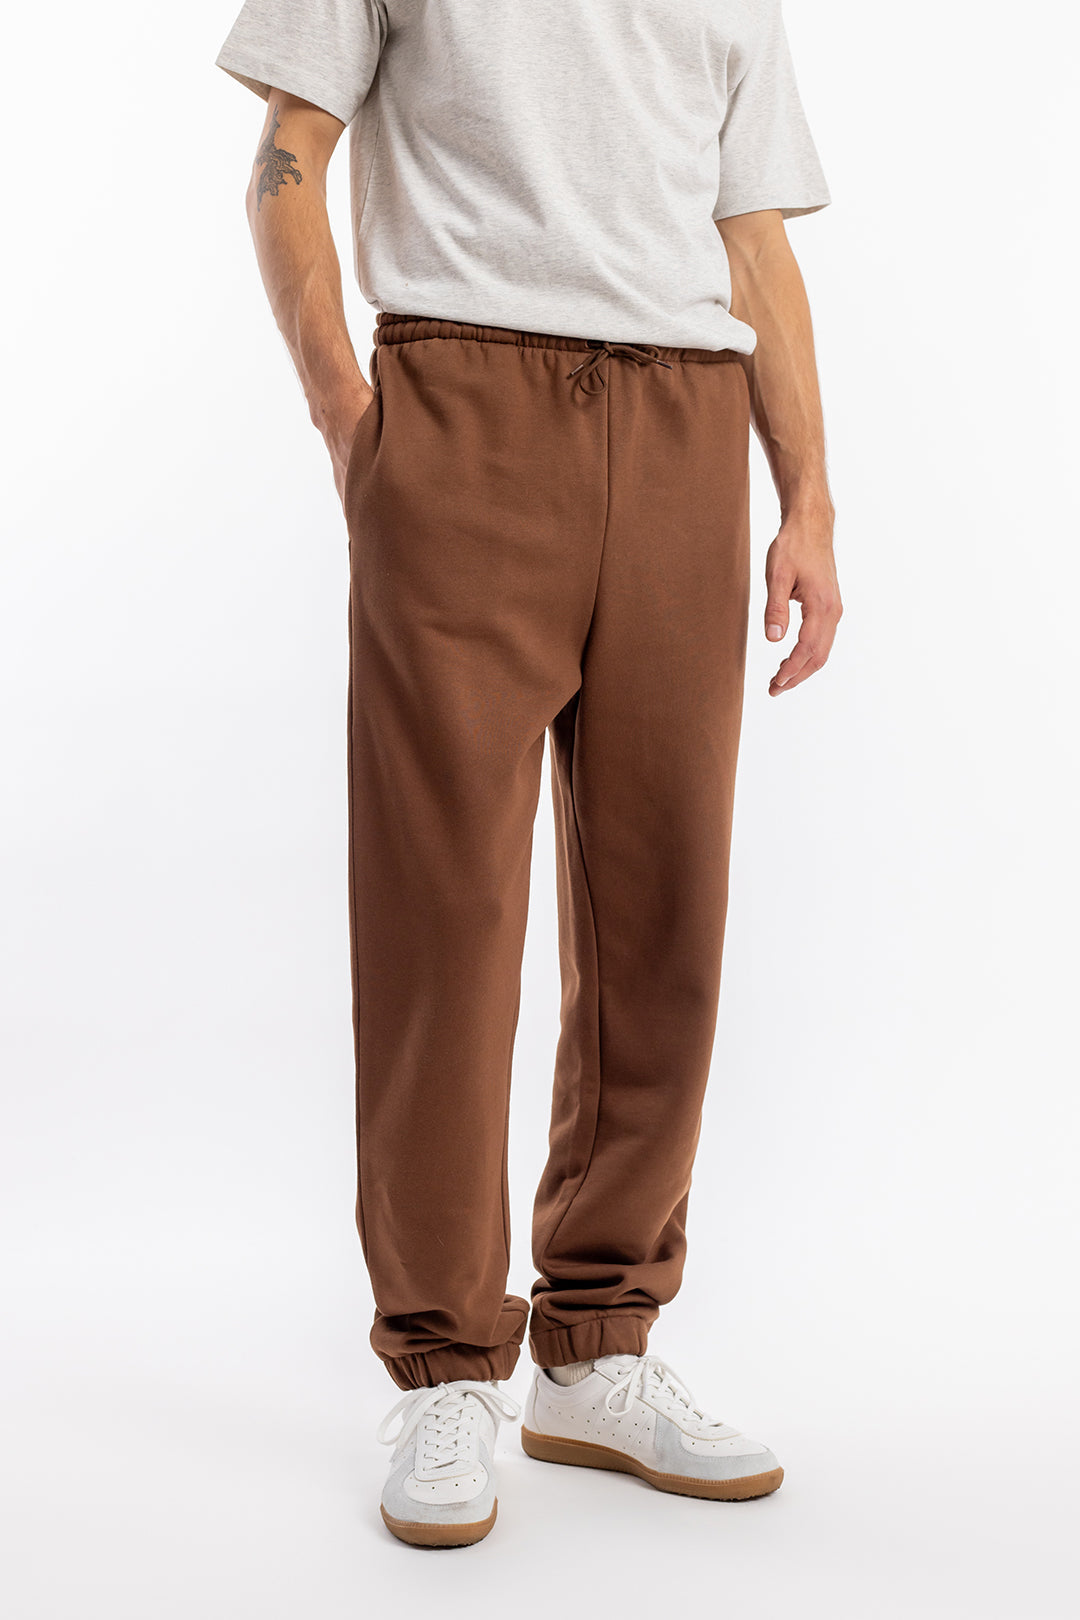 Dark brown logo jogging pants made of organic cotton by Rotholz